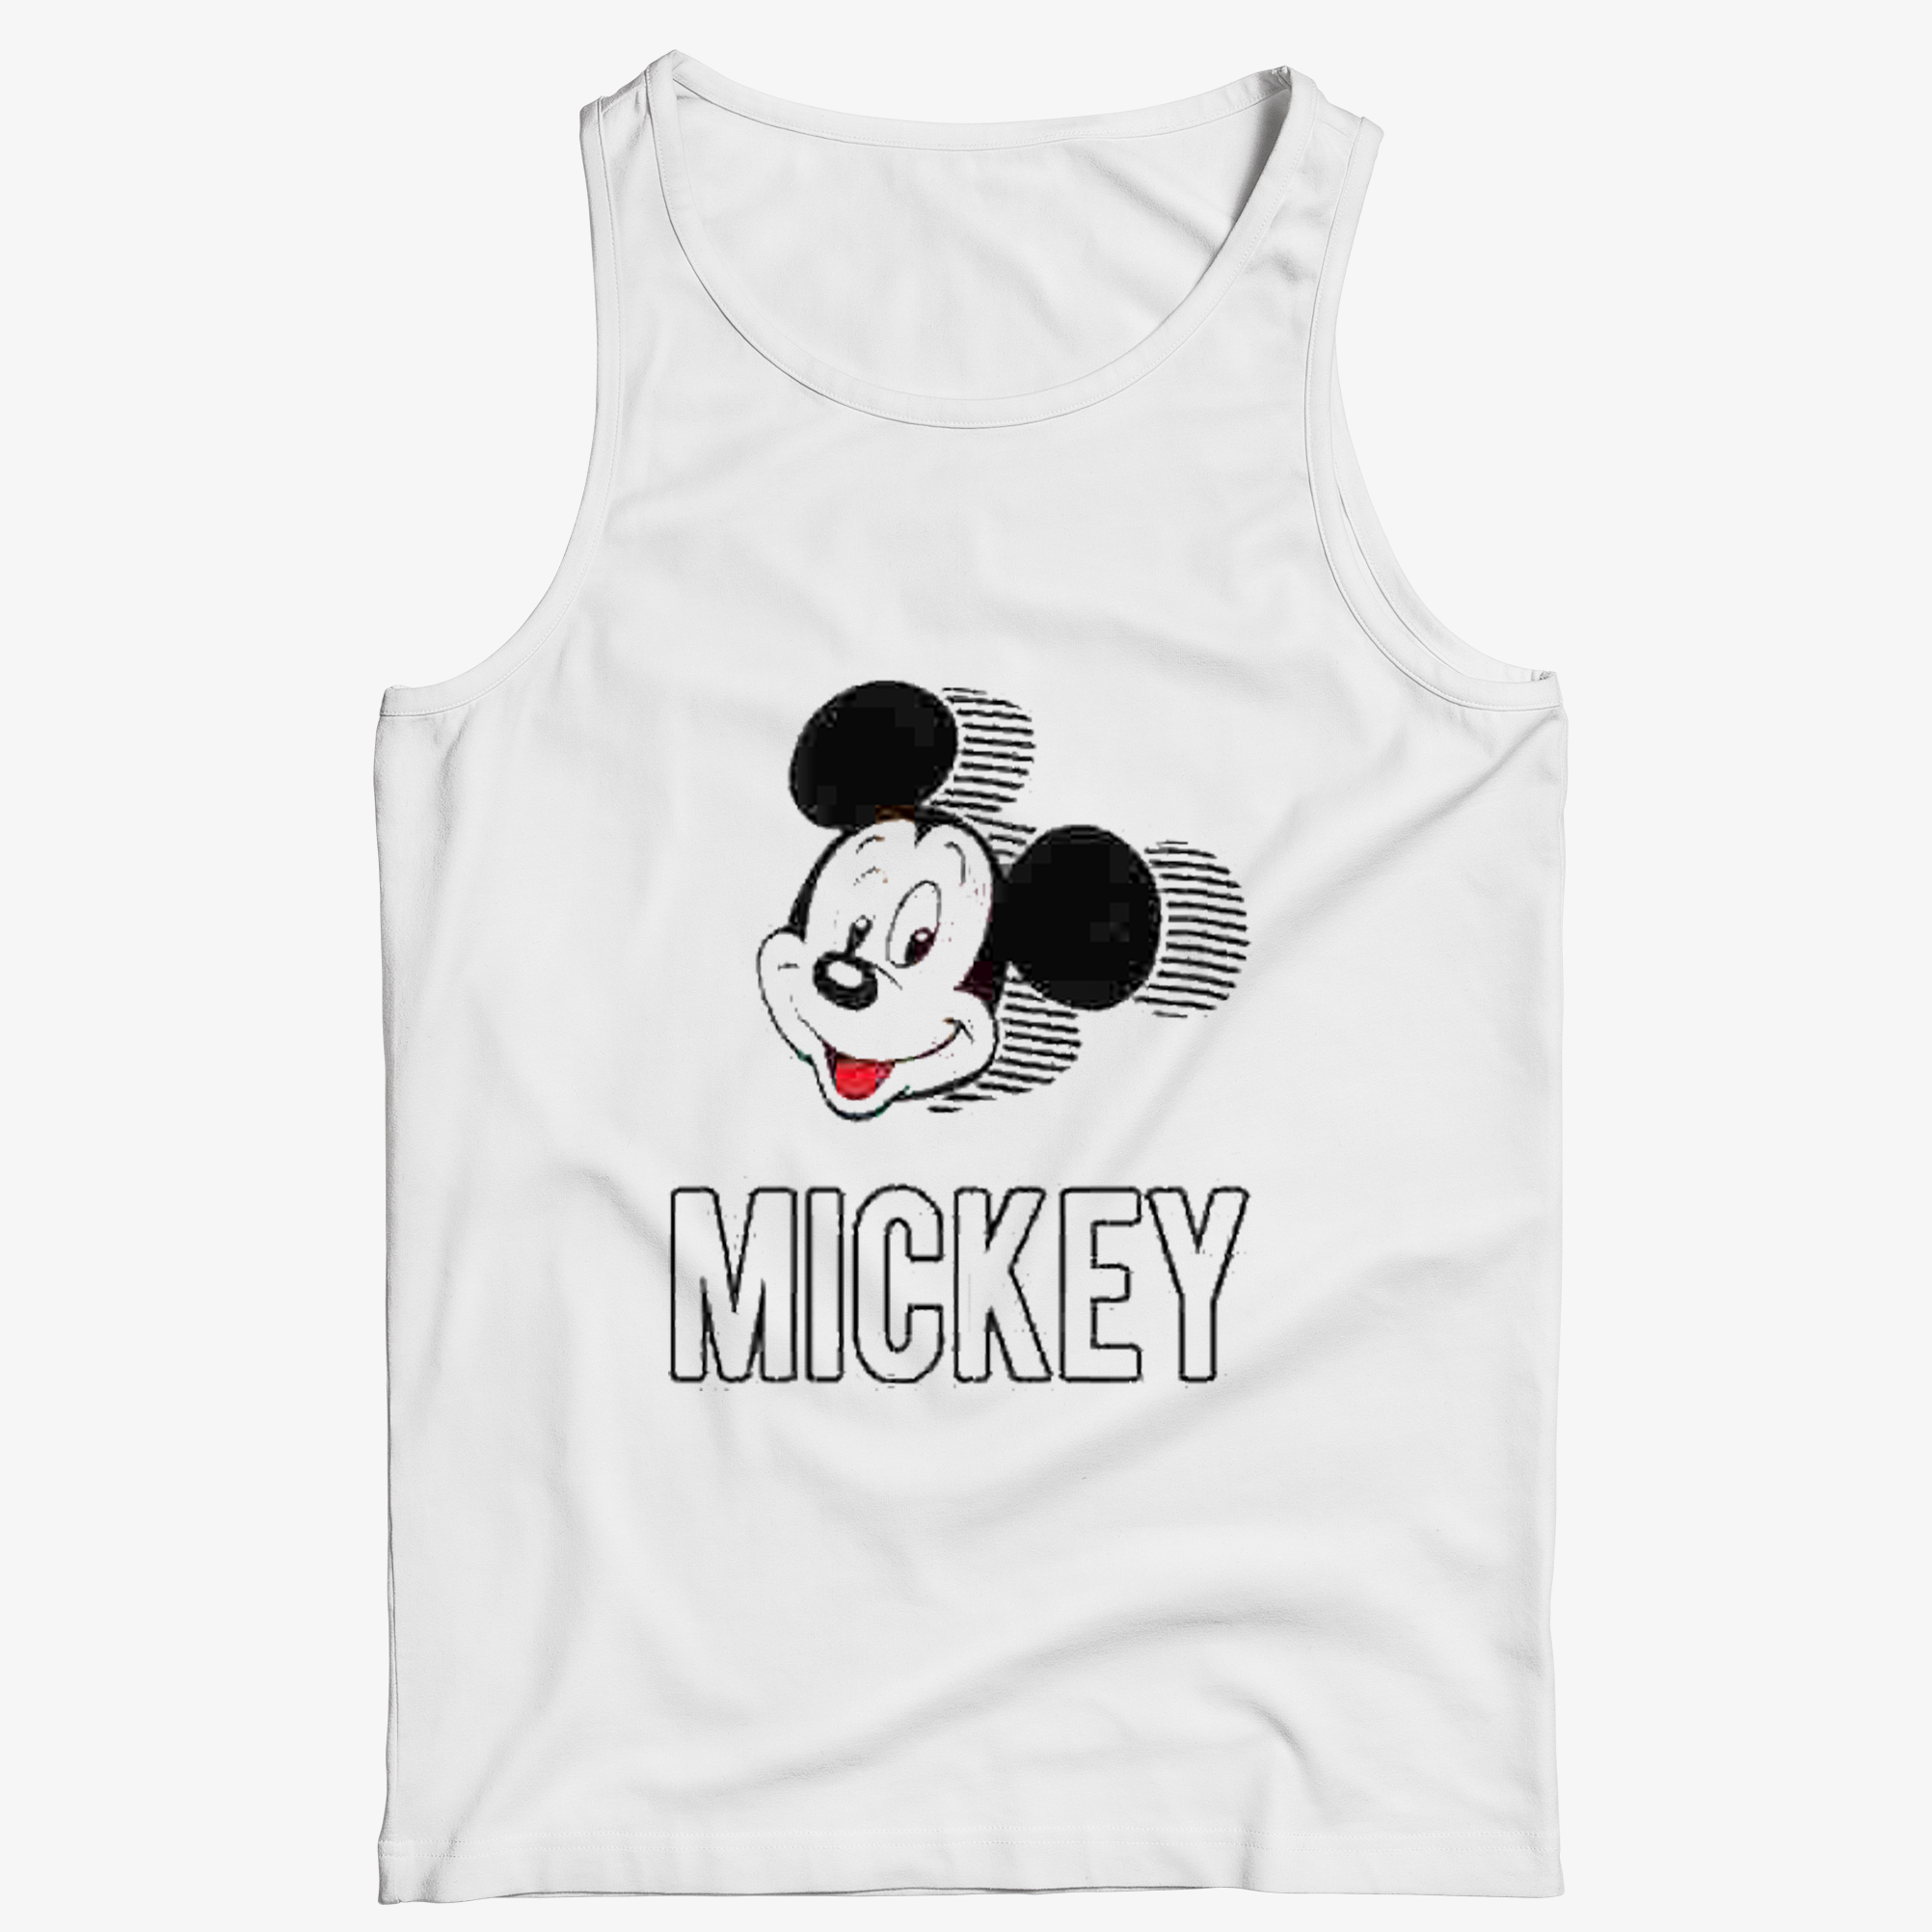 Big Mickey Mouse Head Tank Top